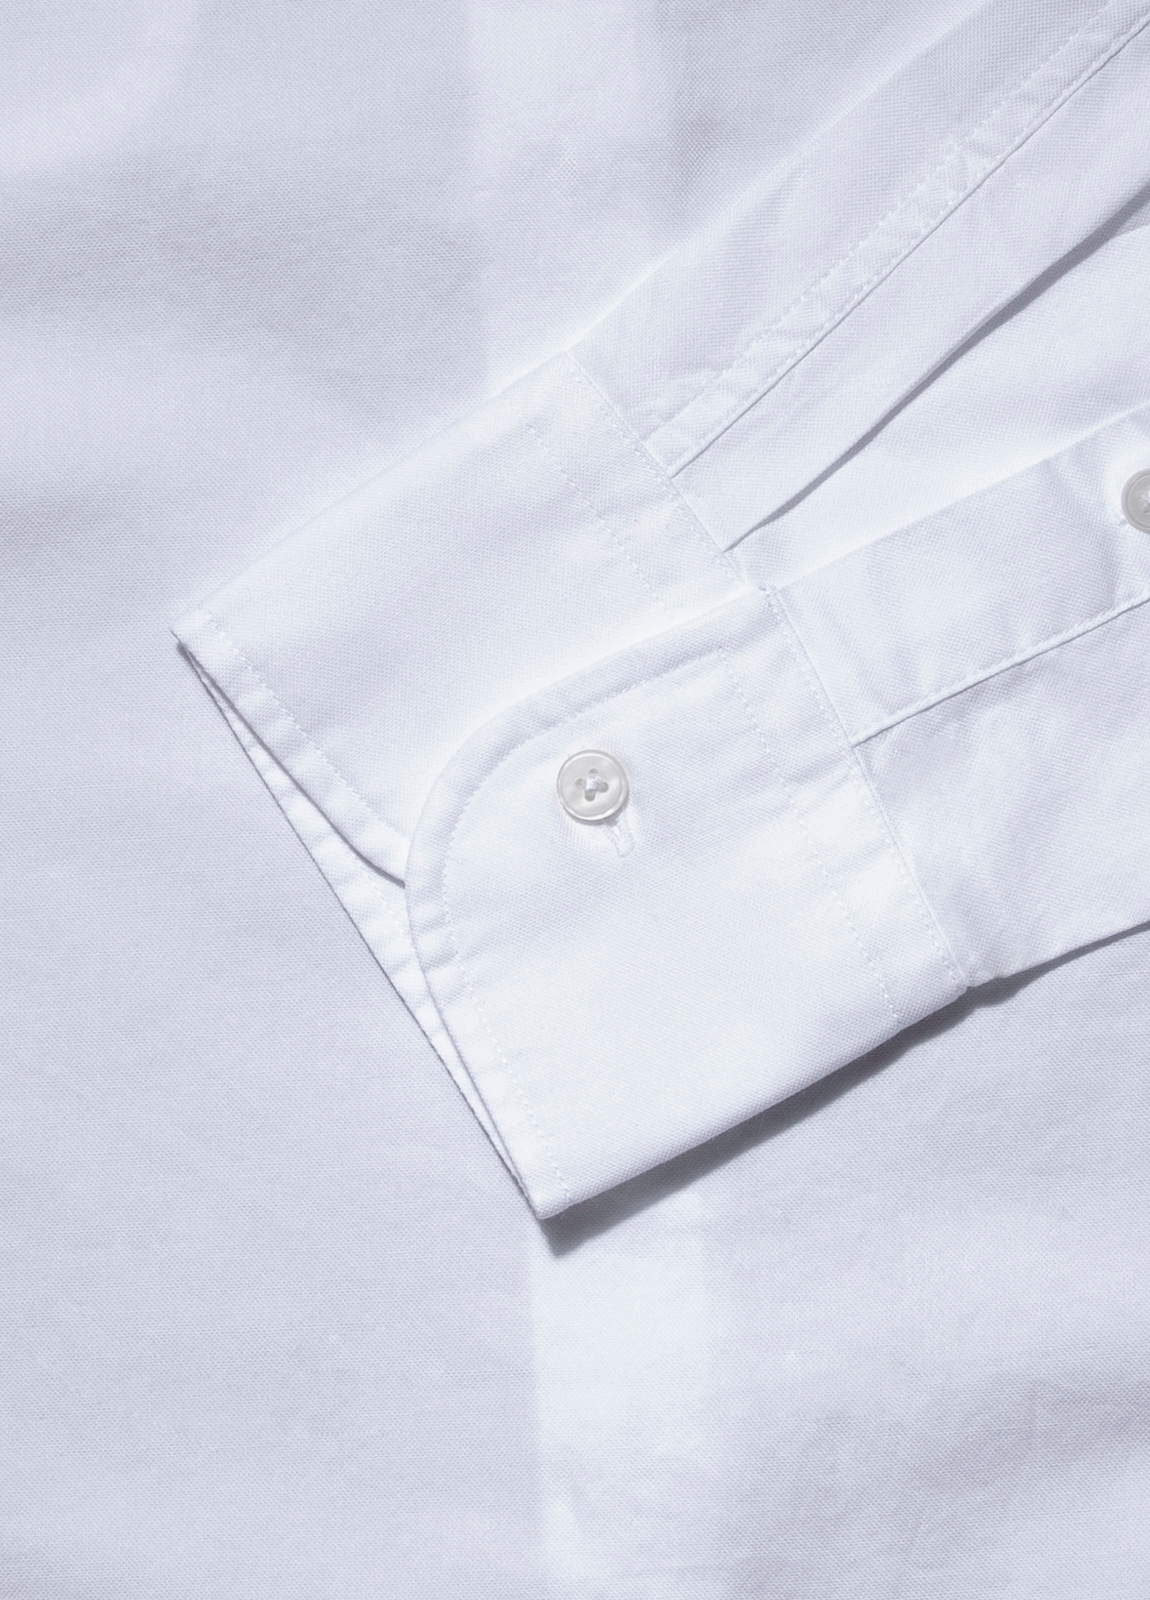 Camisa sport FUREST COLECCIÓN pin point blanco - Ítem2